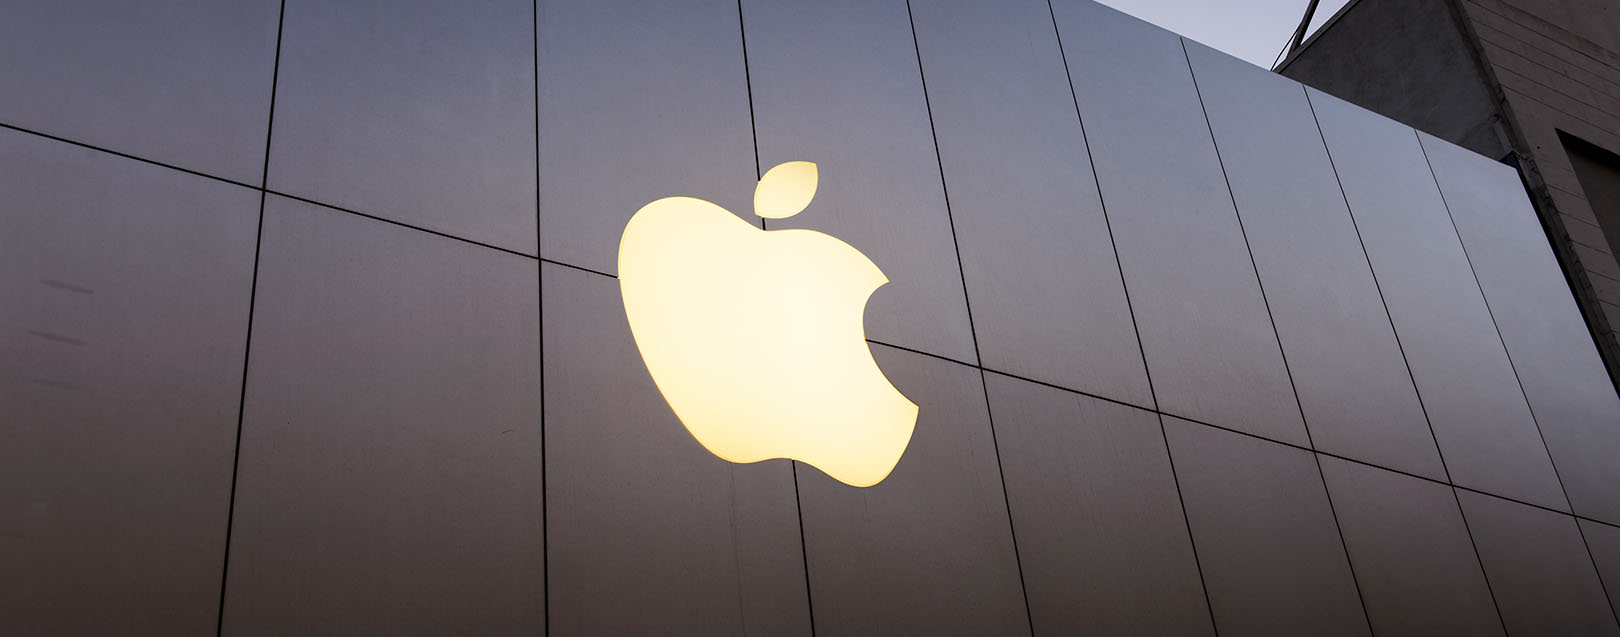 Apple team to meet Govt officials on Jan 25